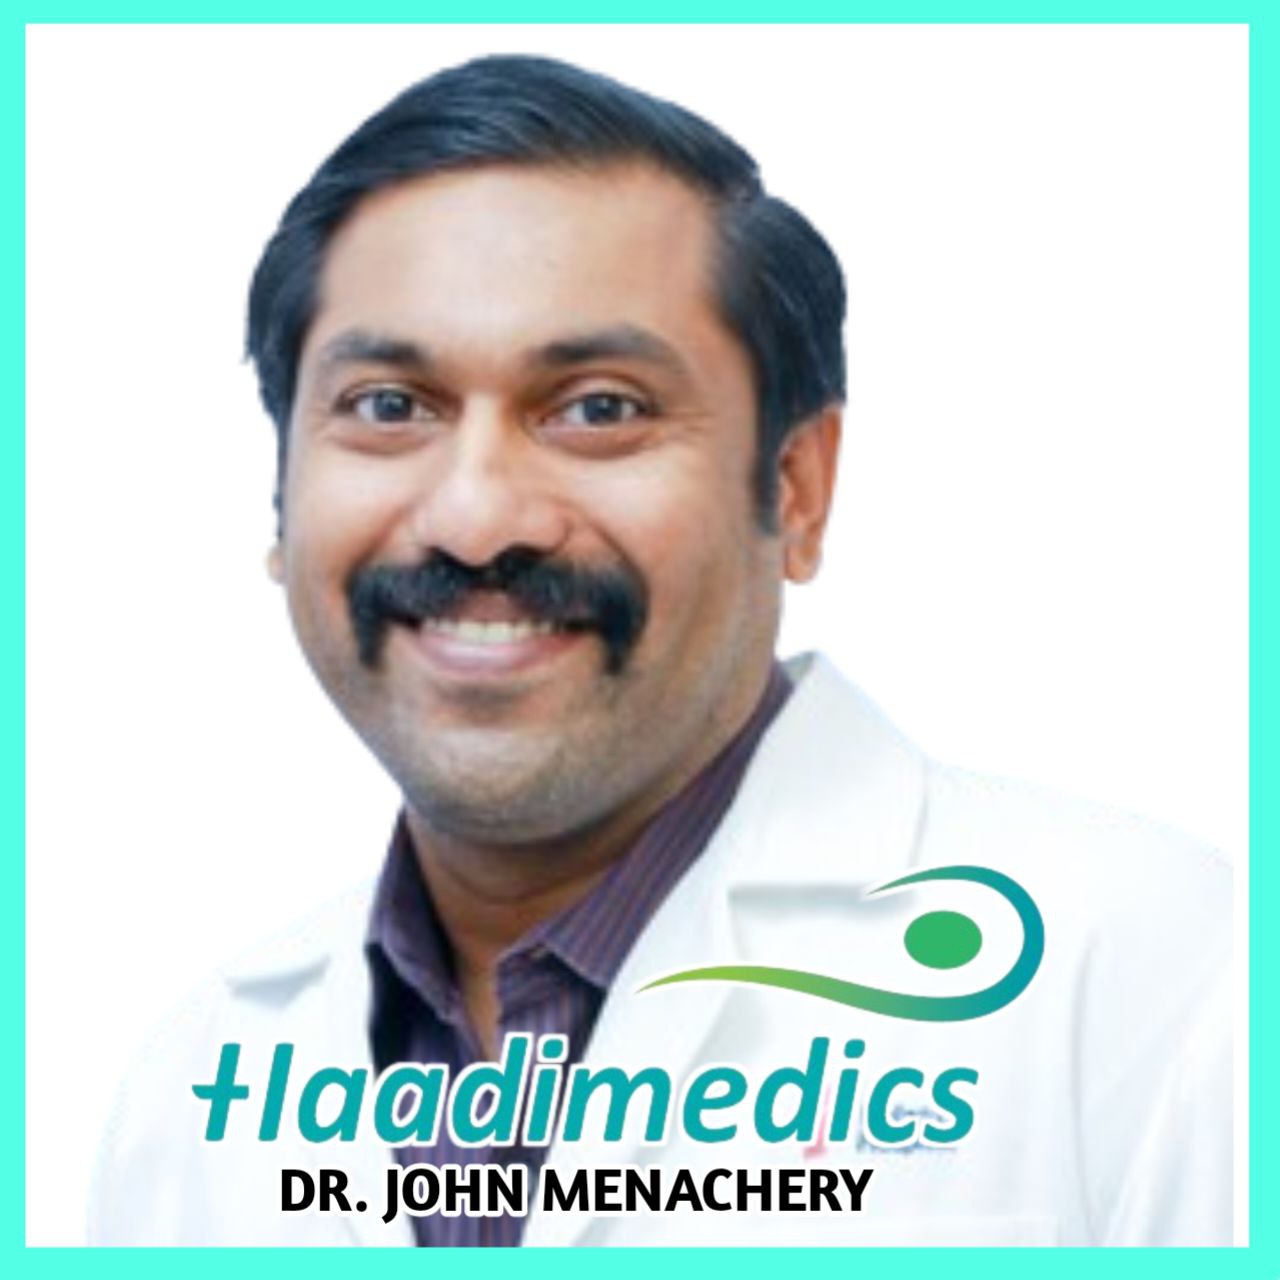 Dr. John Menachery